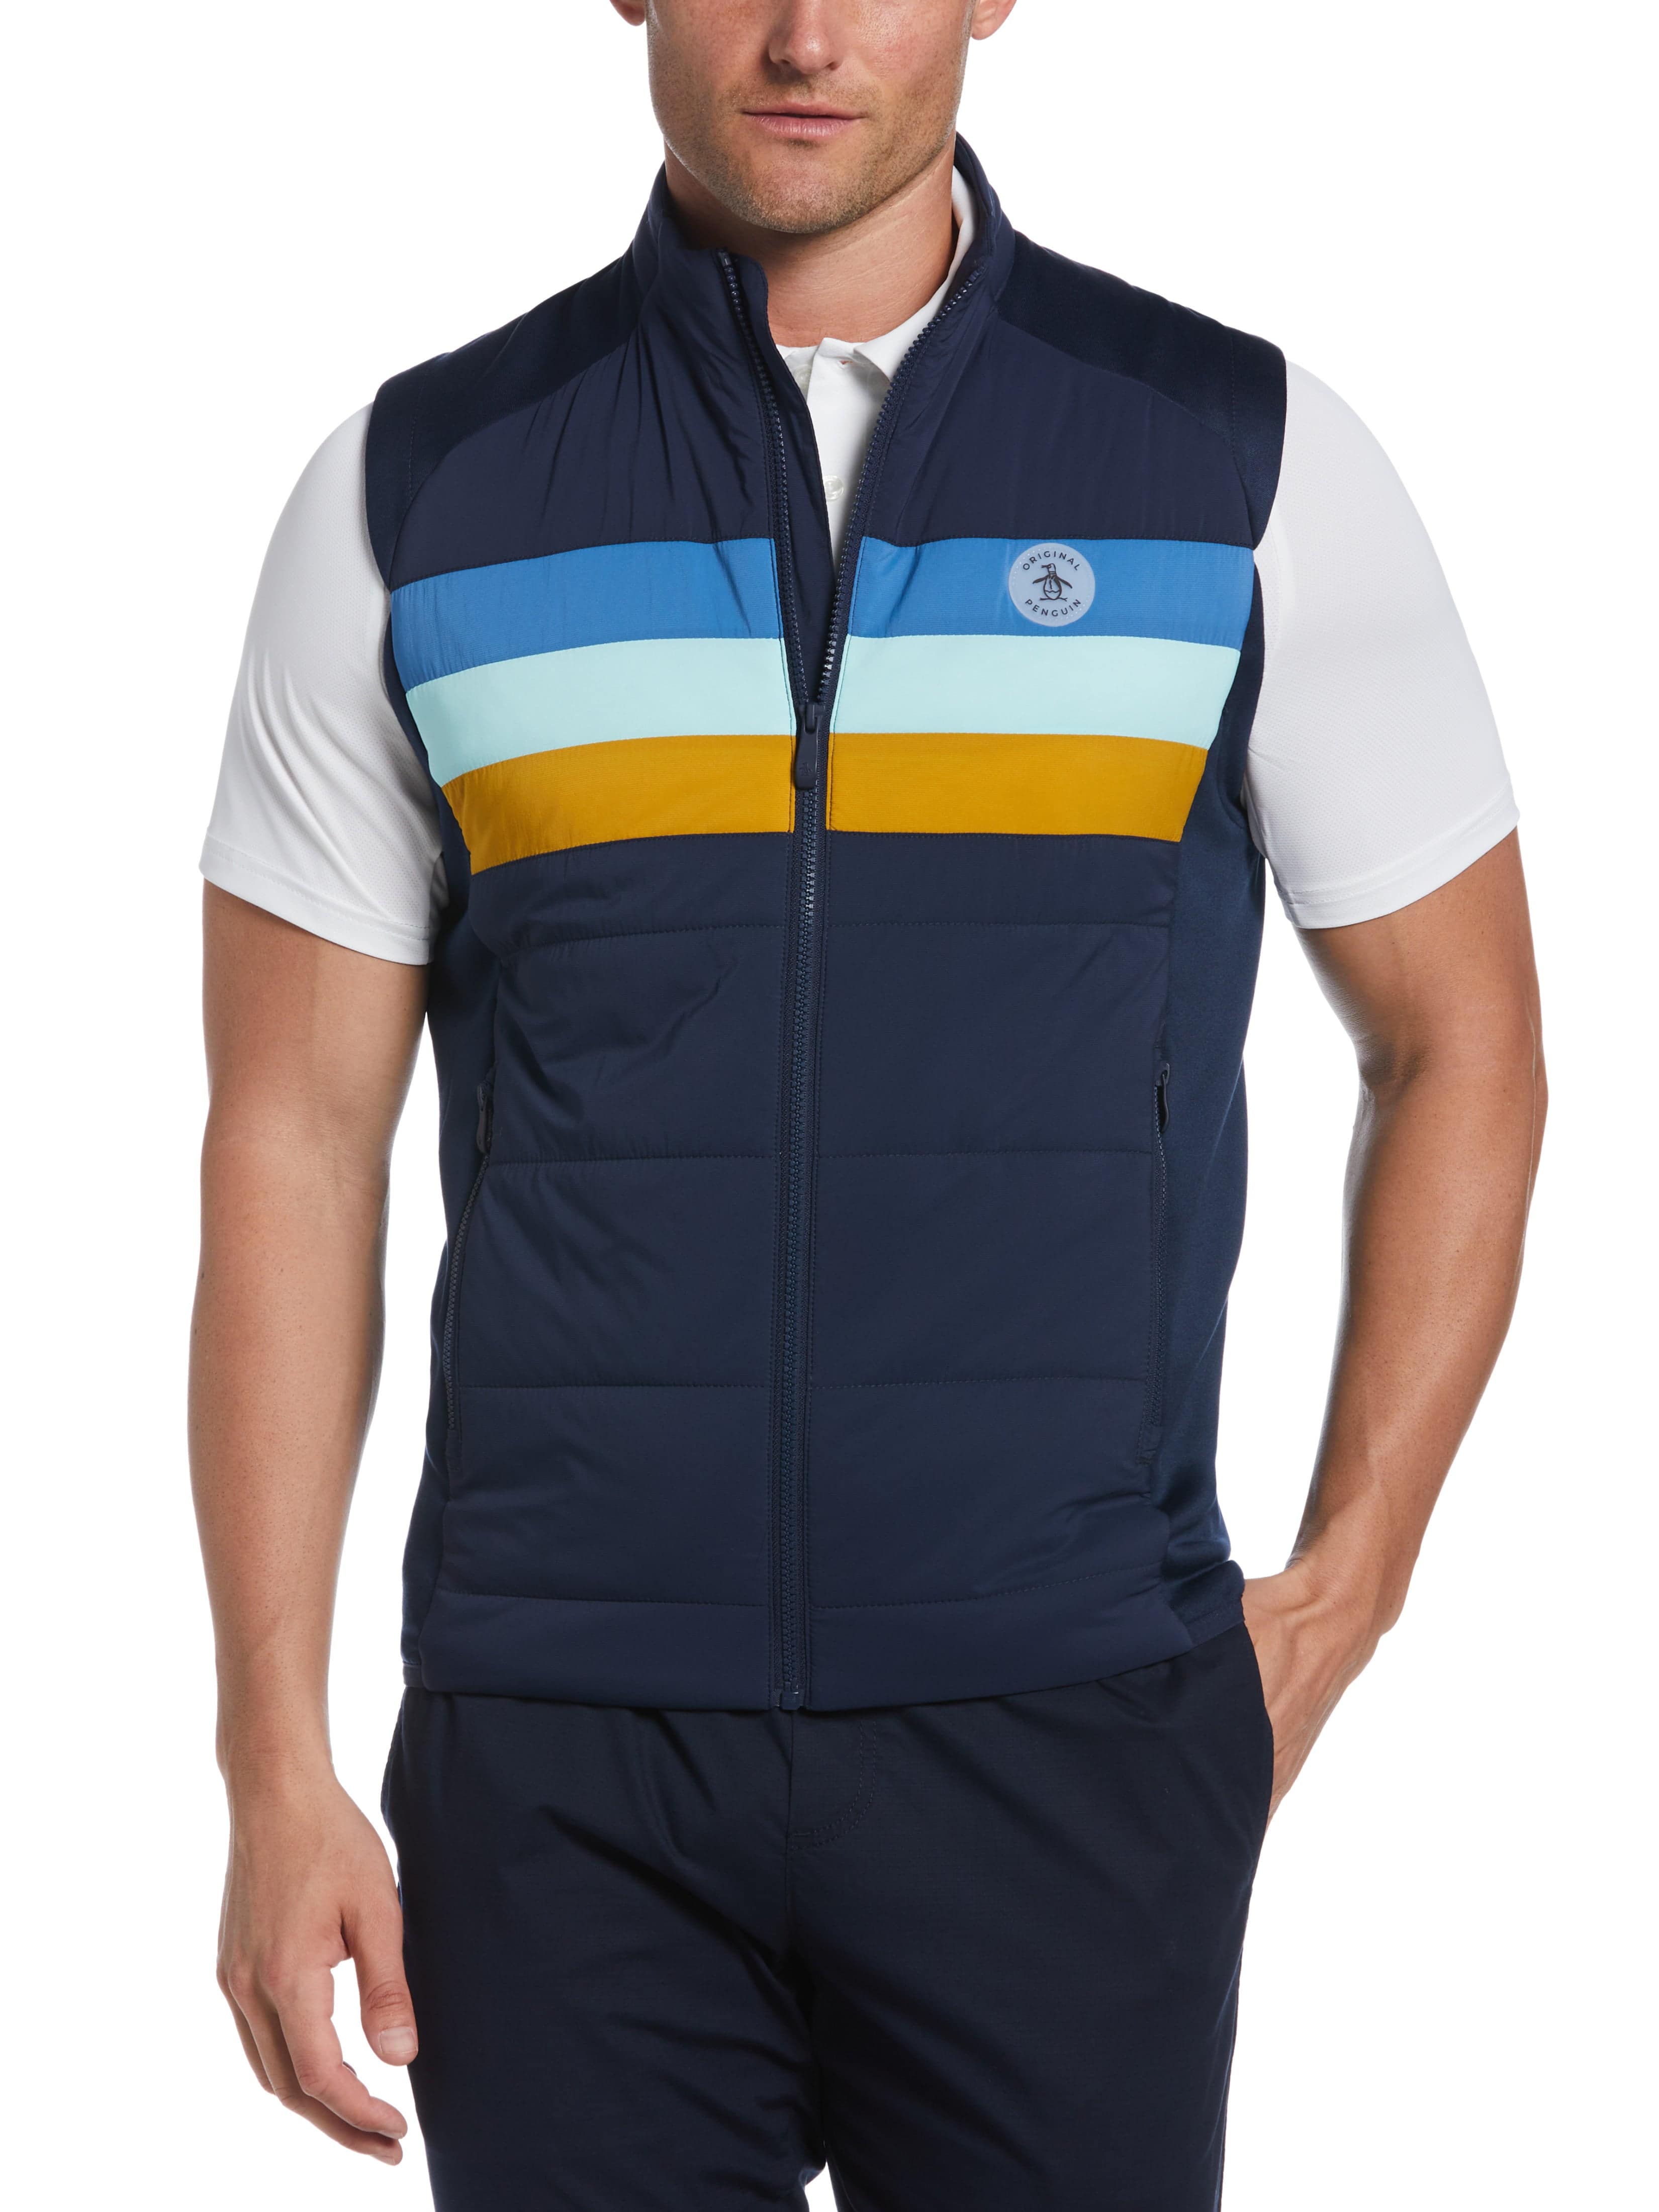 Original Penguin Mens Insulated 70s Golf Vest Top, Size Large, Dark Navy Blue, 100% Nylon | Golf Apparel Shop